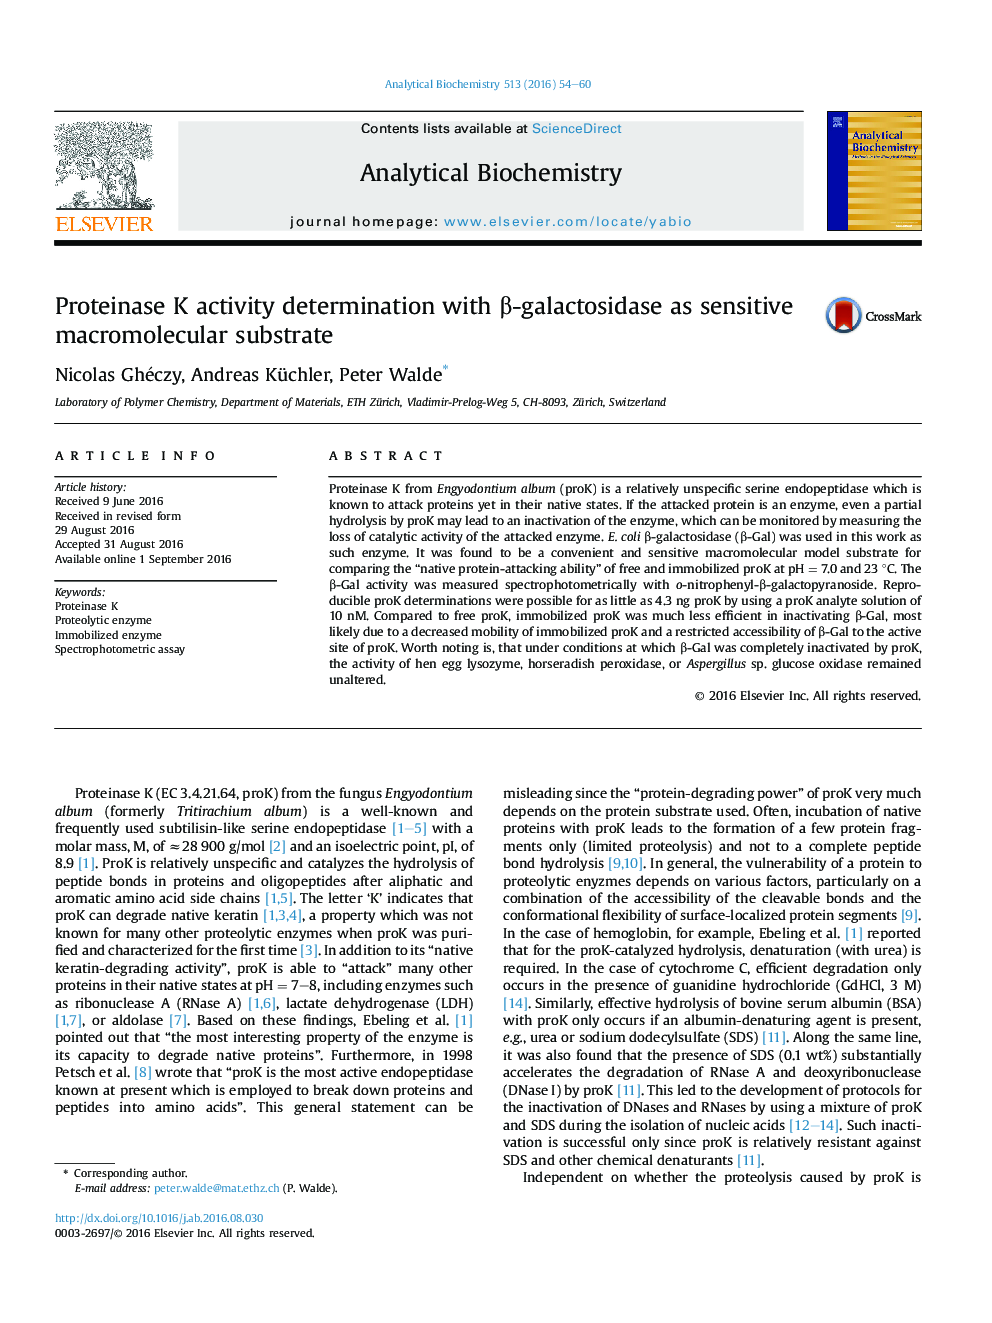 Proteinase K activity determination with Î²-galactosidase as sensitive macromolecular substrate